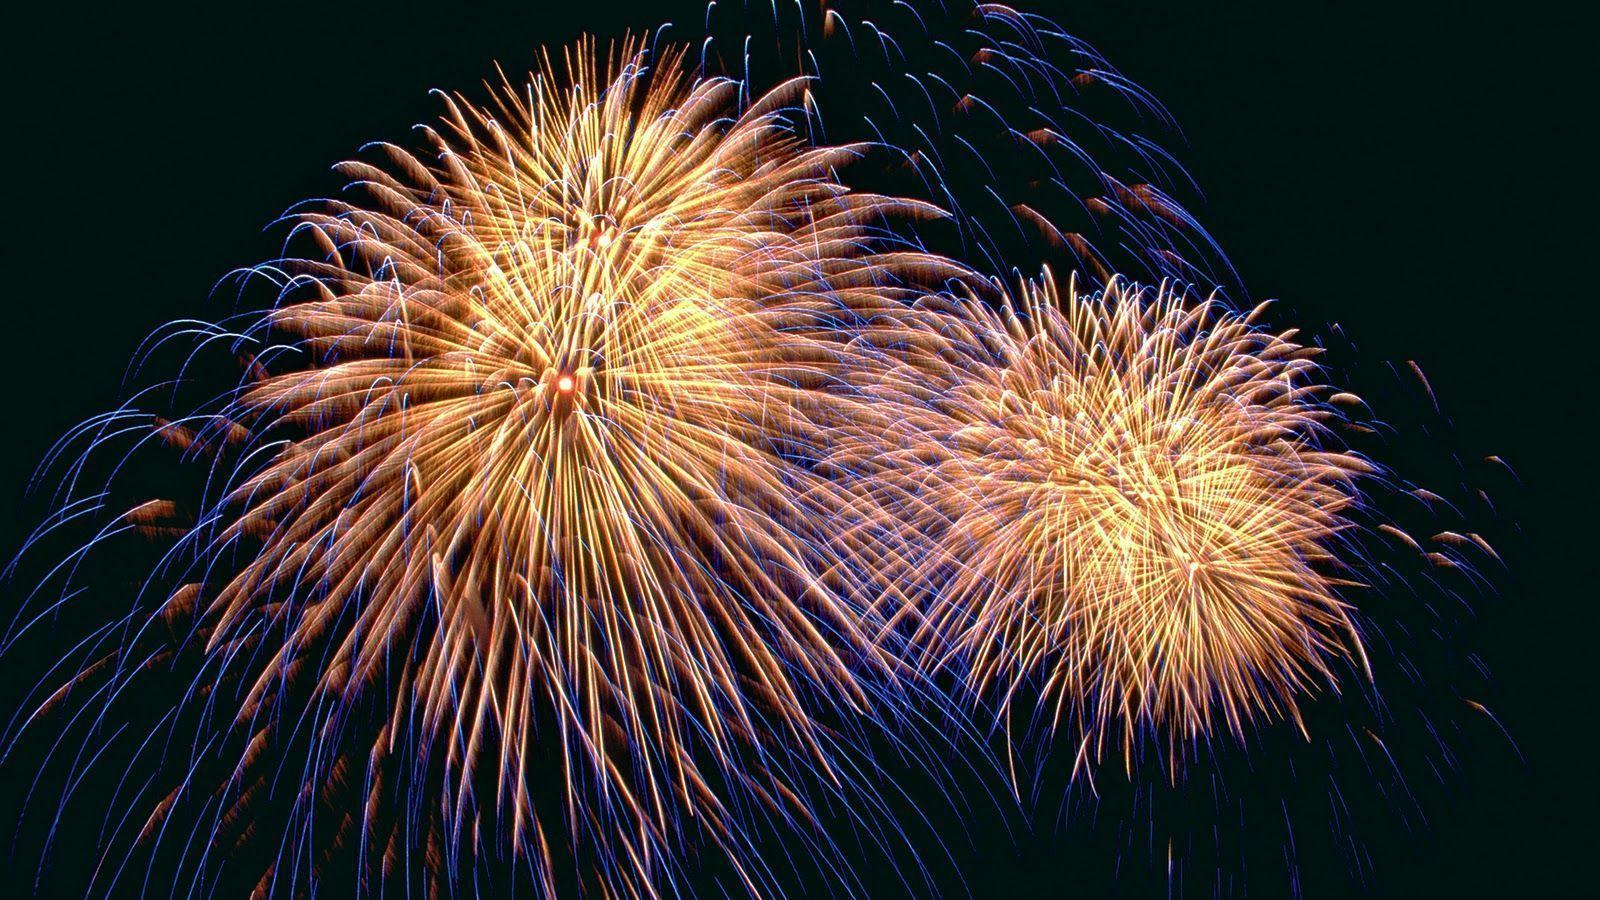 trololo blogg: HD Wallpaper Fireworks